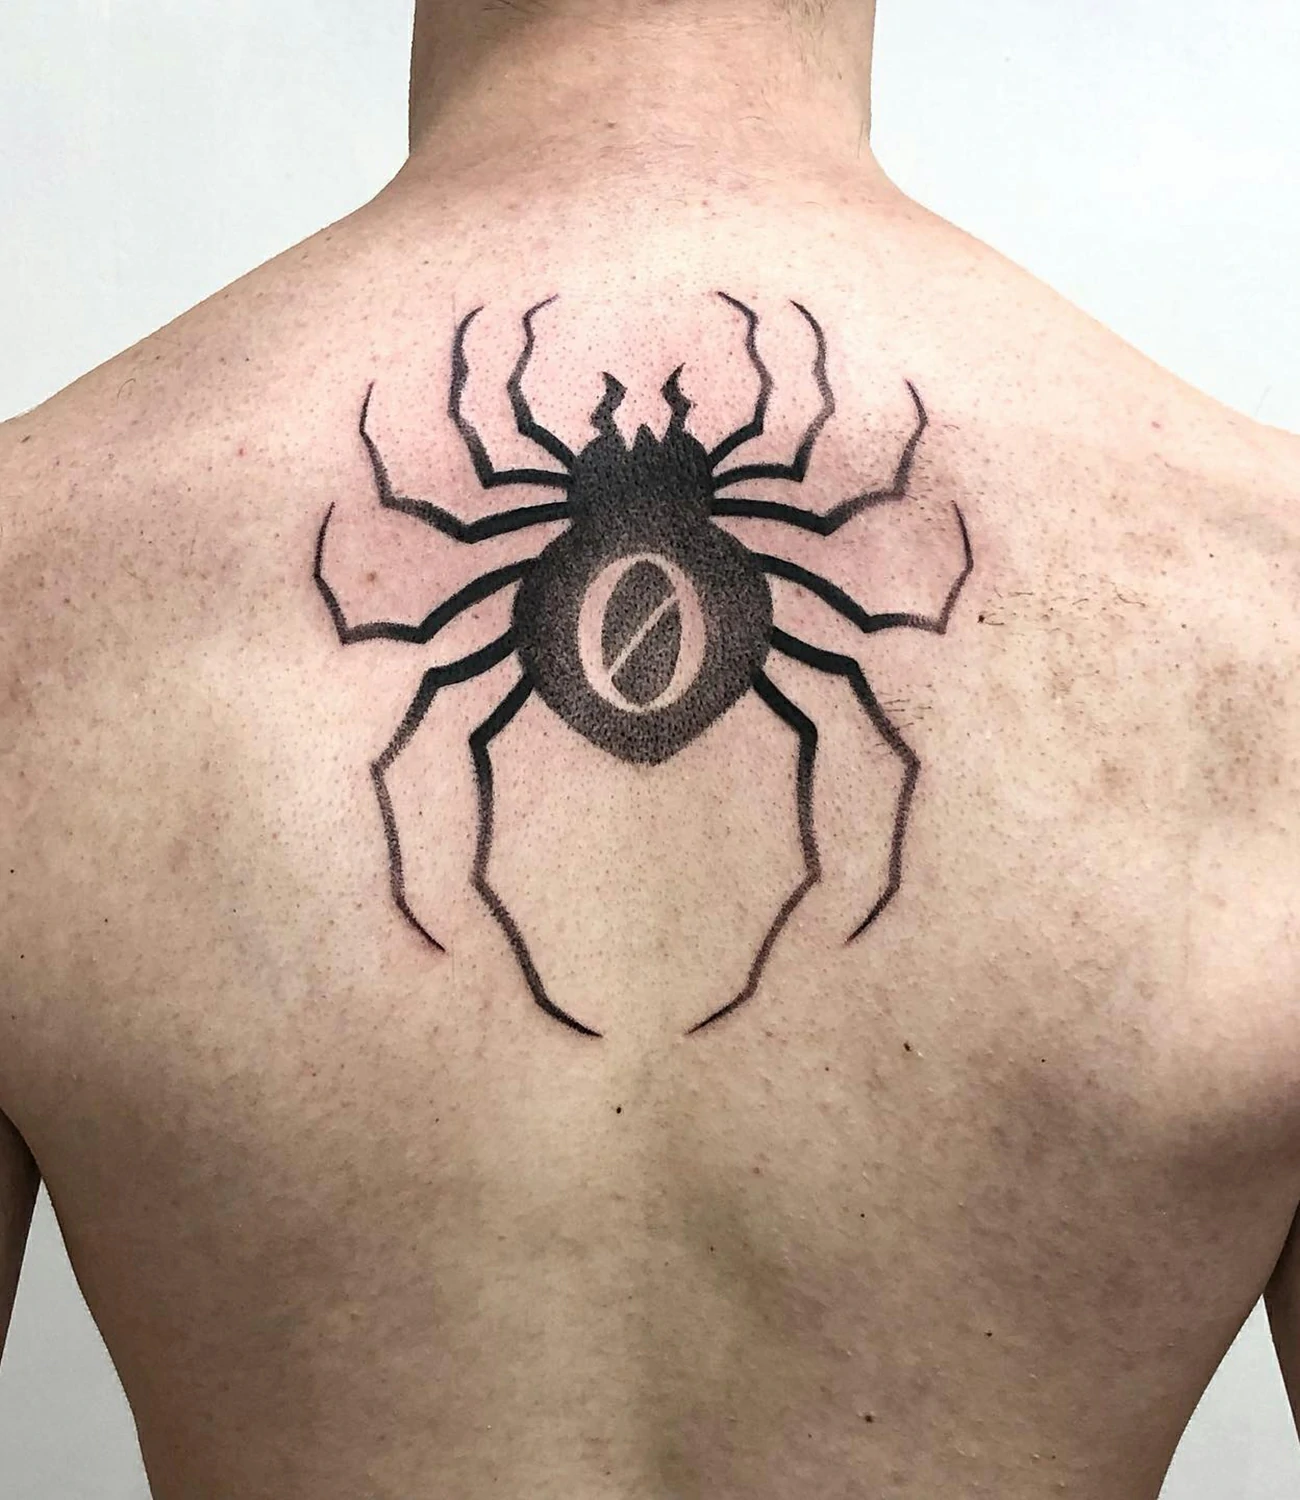 Chrollo spider tattoo